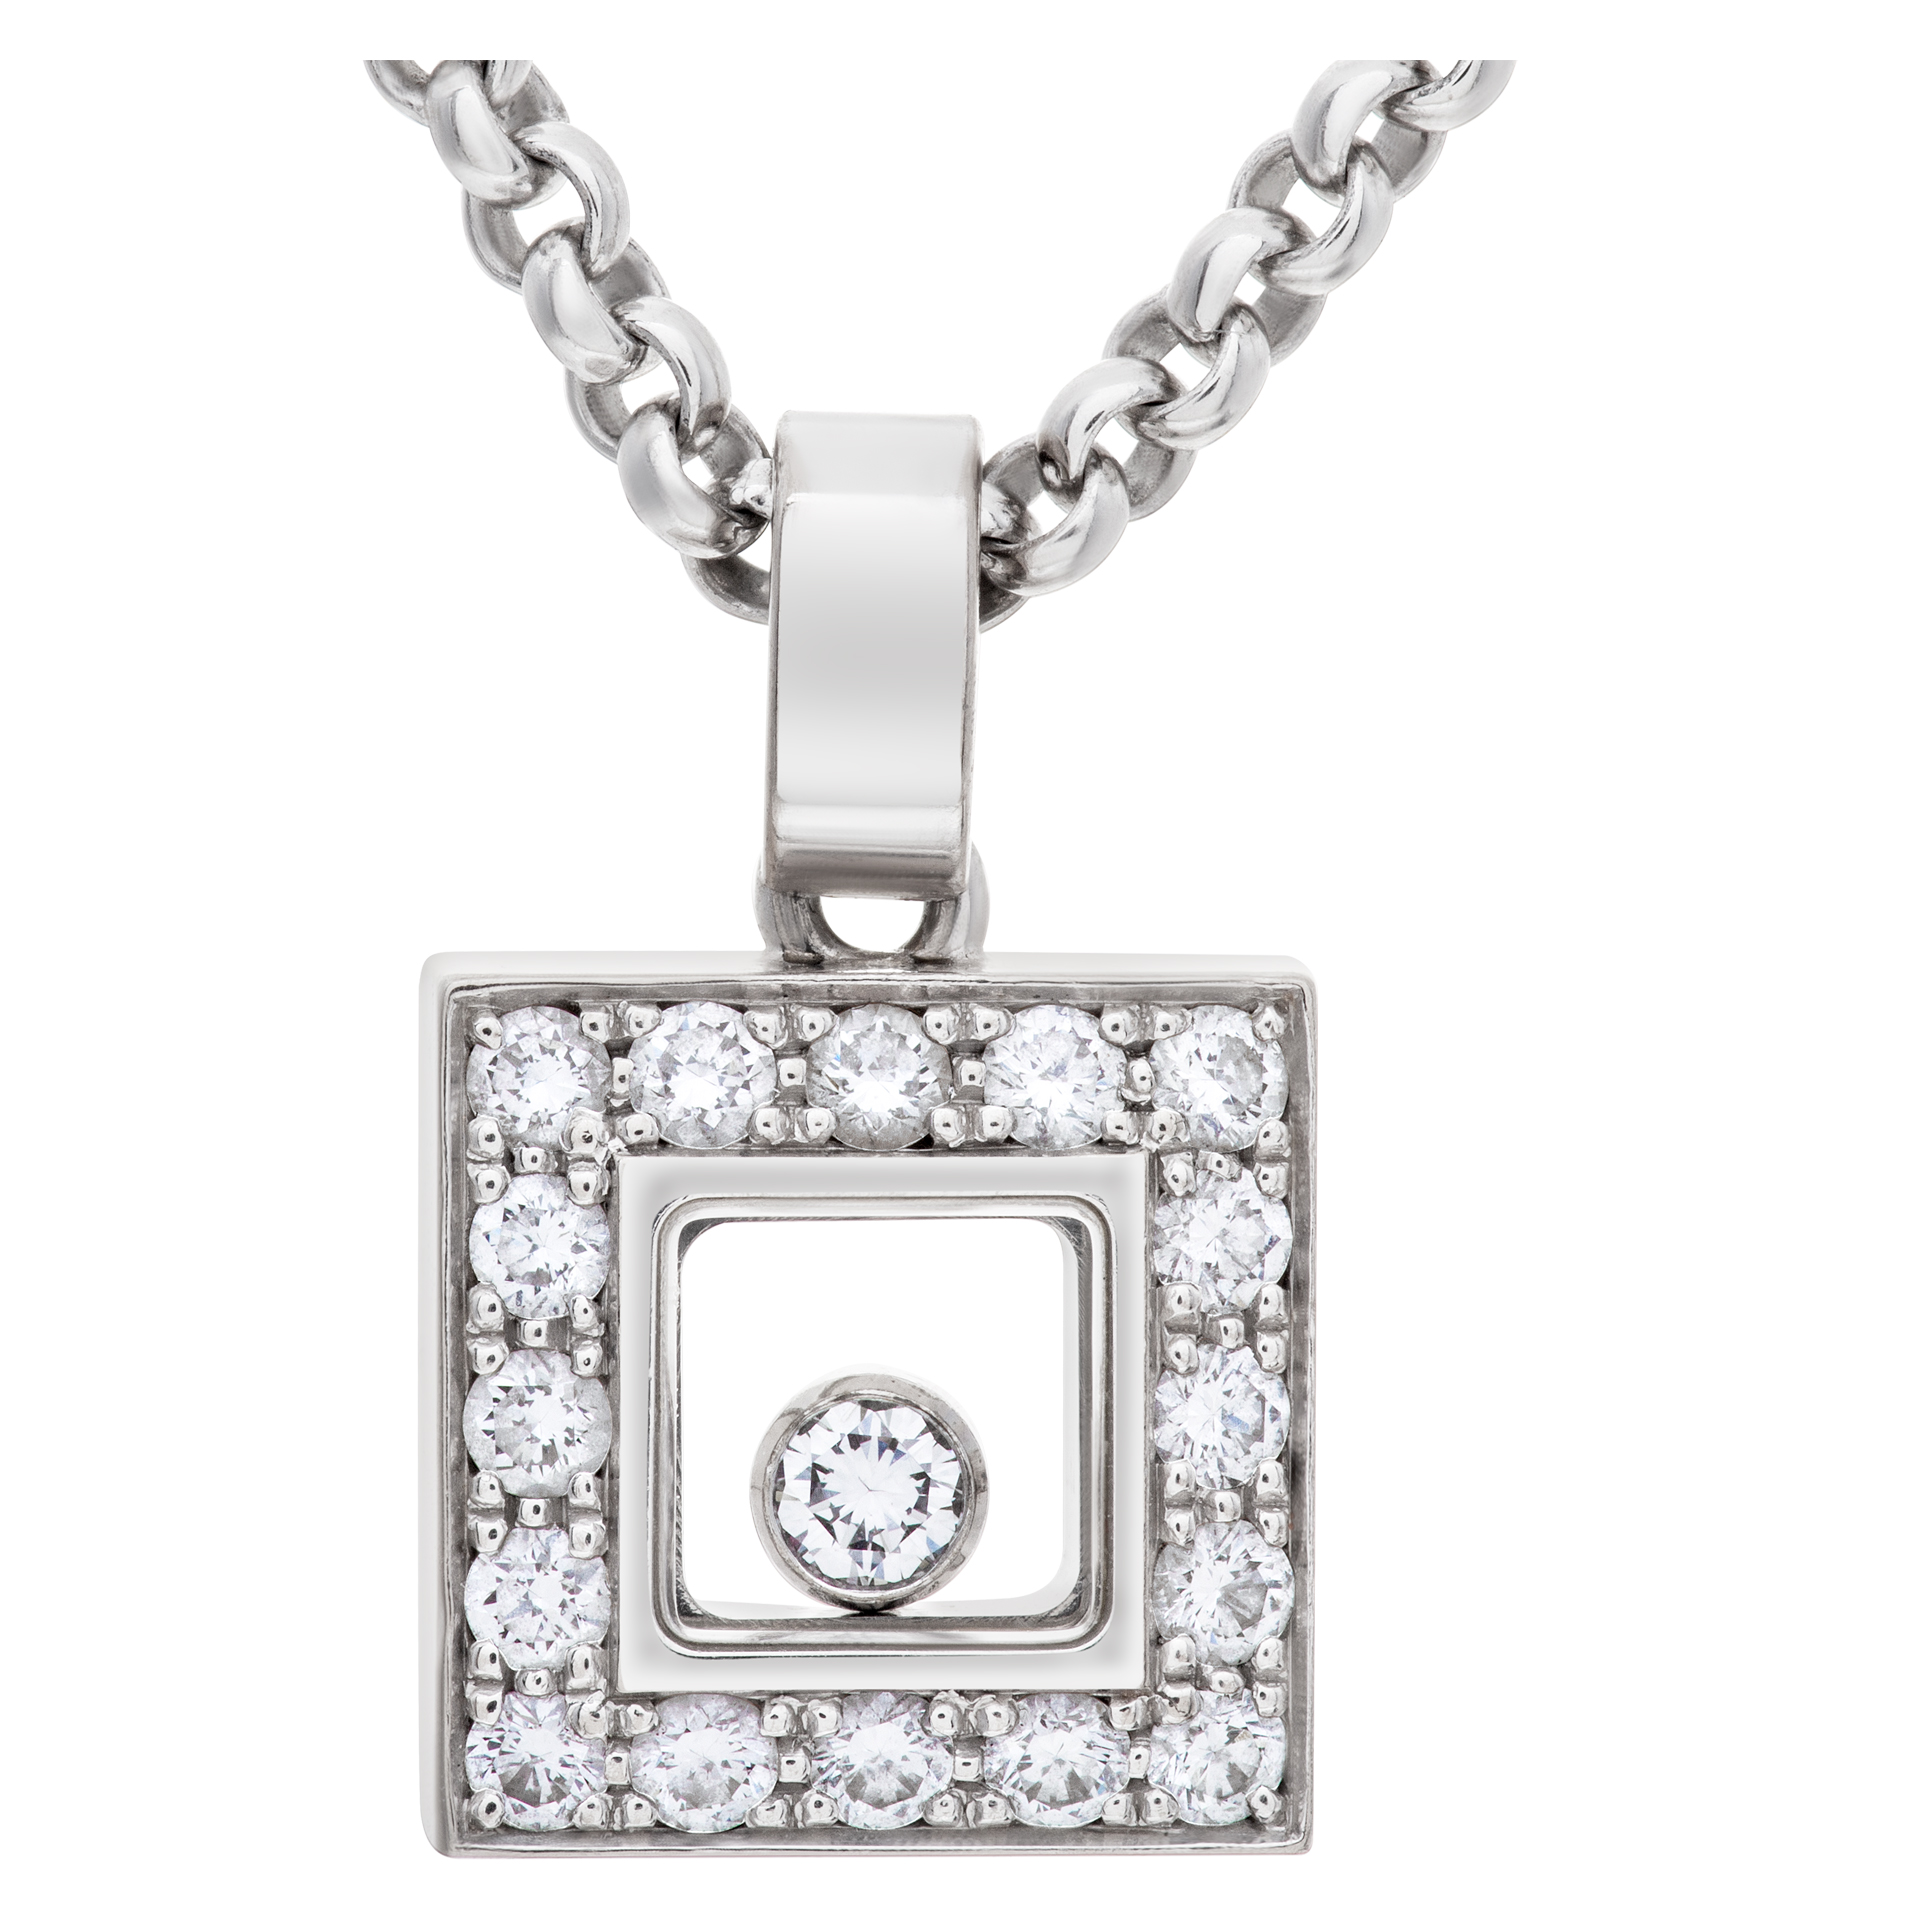 Chopard "Happy Diamond" Square pendant necklace in 18k white gold